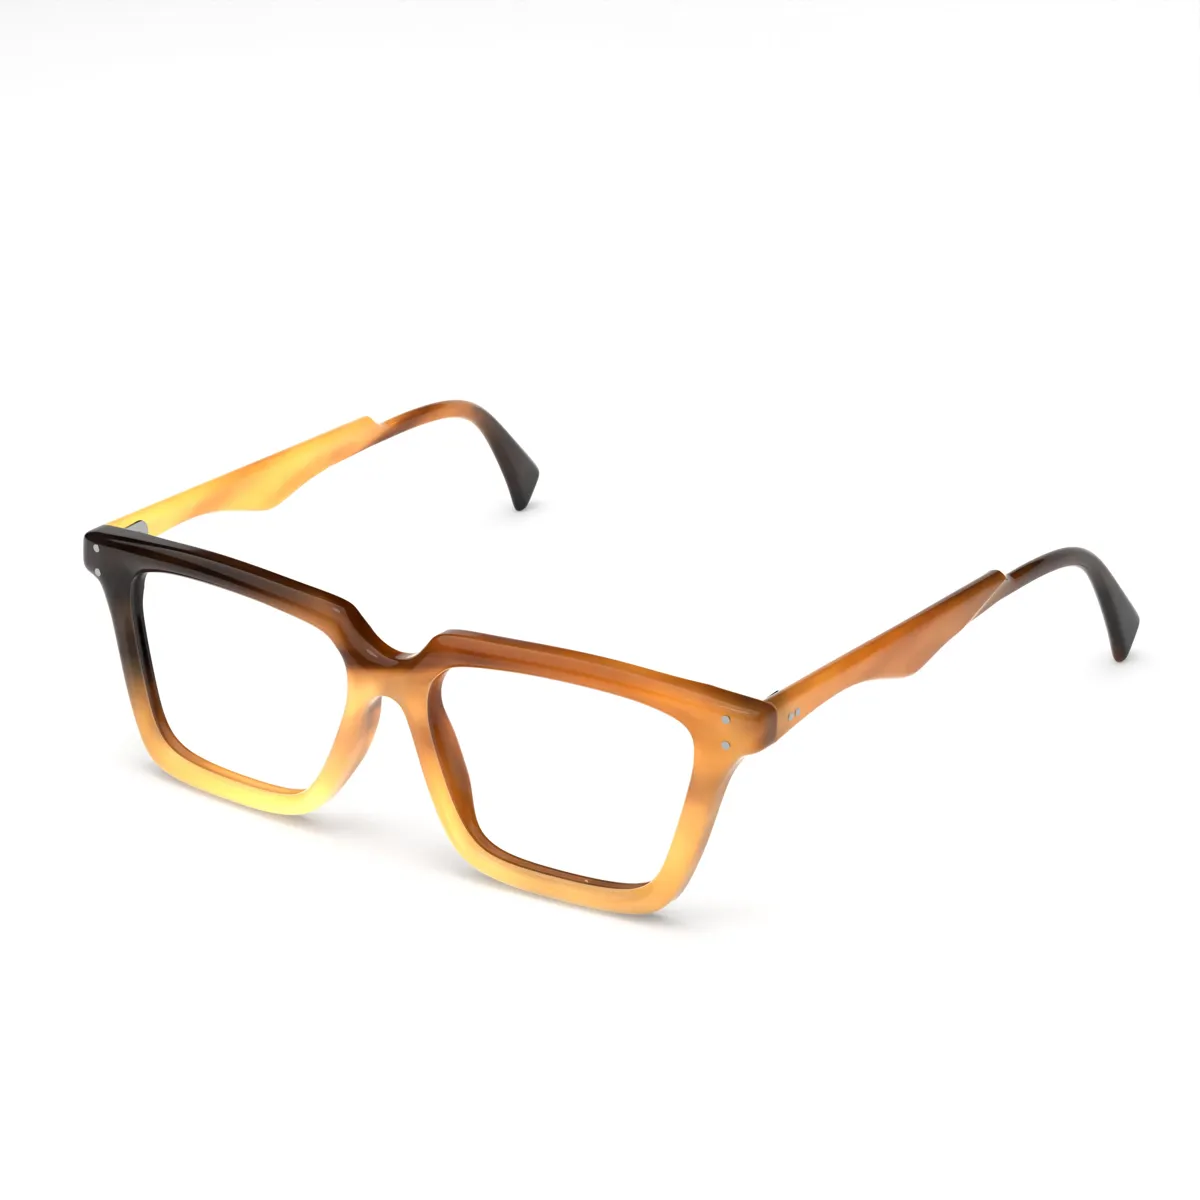 Fl 3 wayfarer eyewear frames